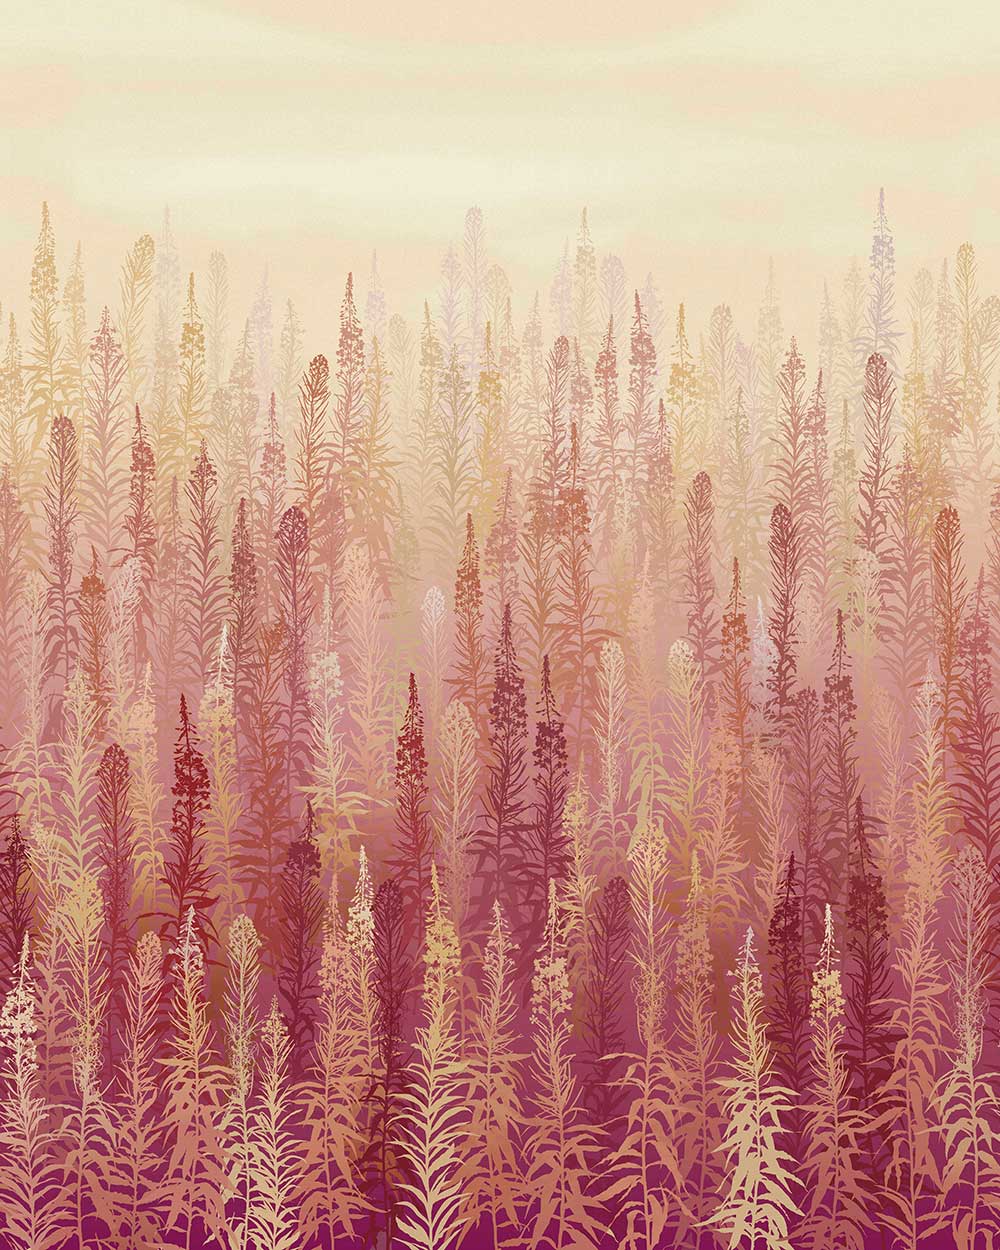 Willowherb Mural - Autumn - by Clarissa Hulse